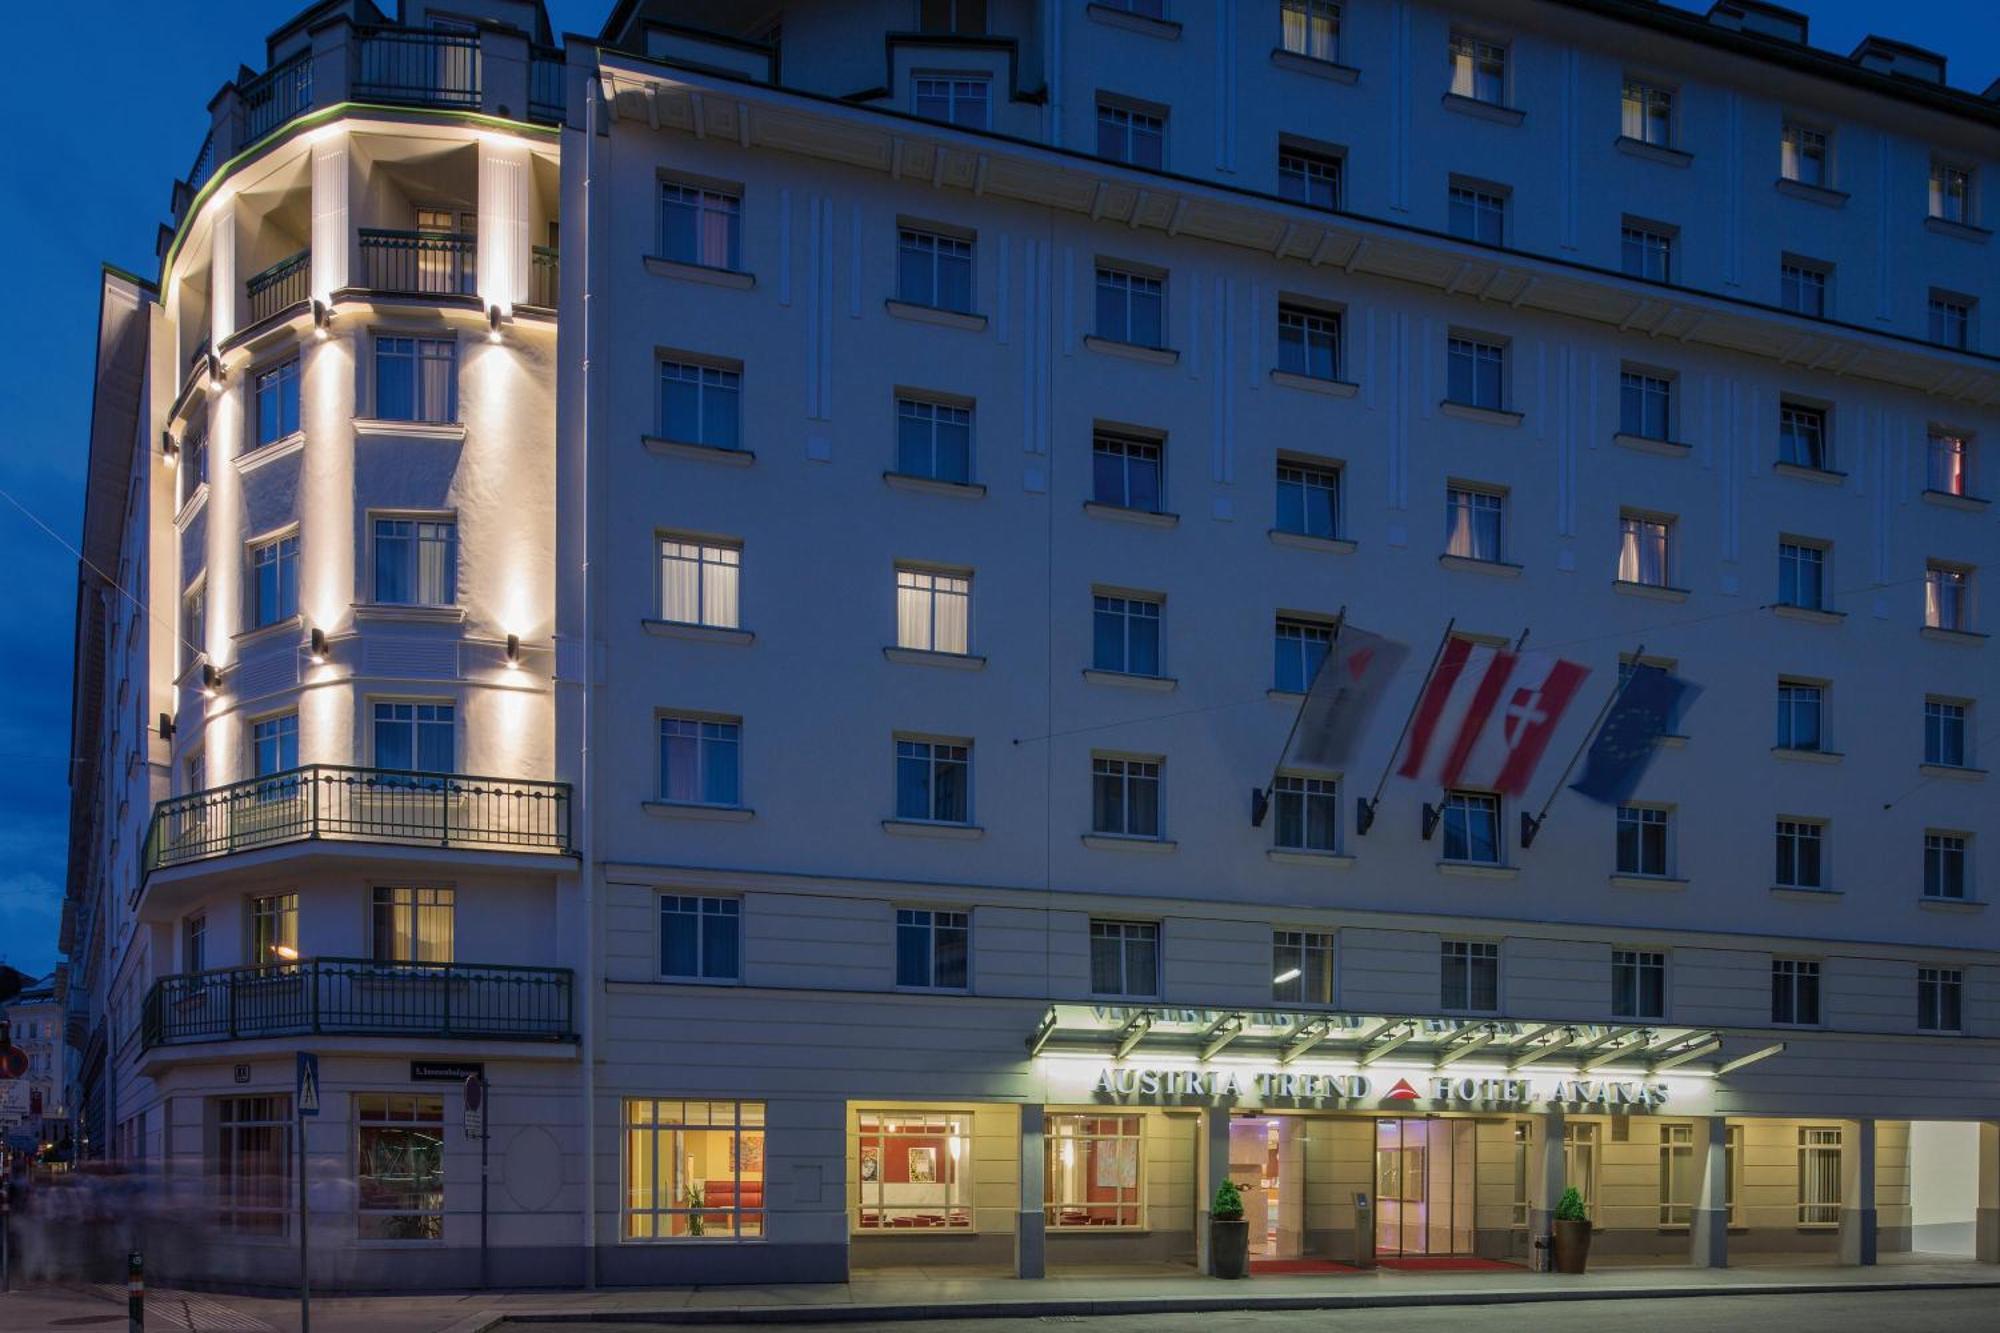 Austria Trend Hotel Ananas Wien Exterior photo